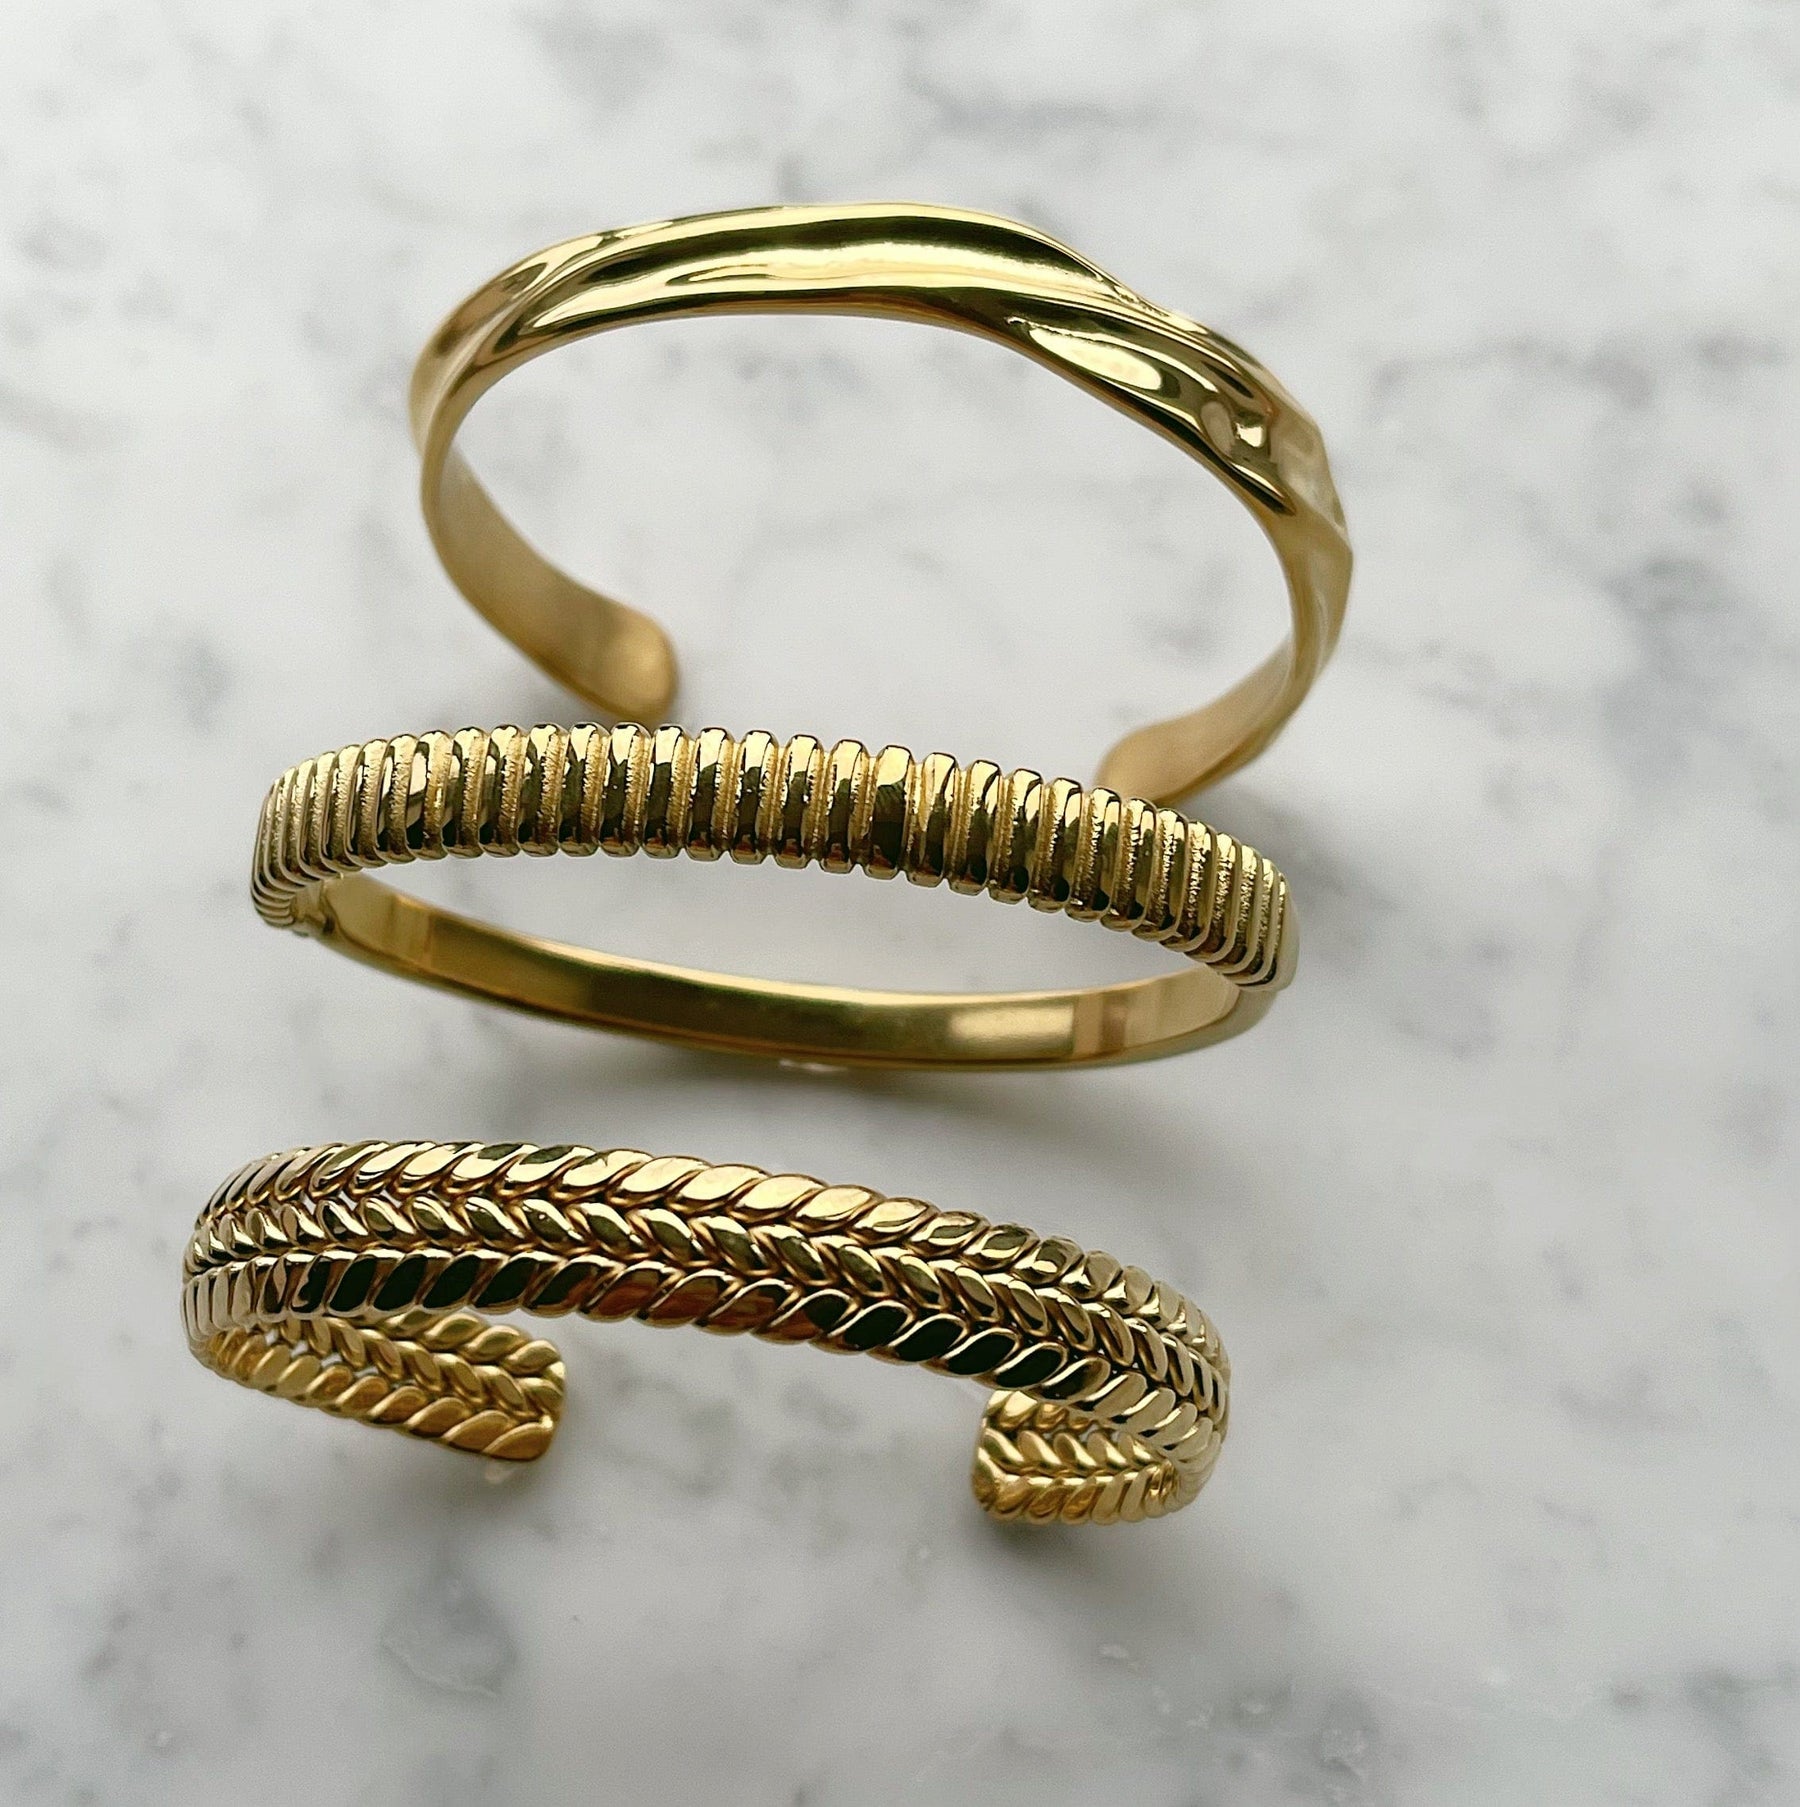 BohoMoon Stainless Steel Indie Cuff Bracelet Gold